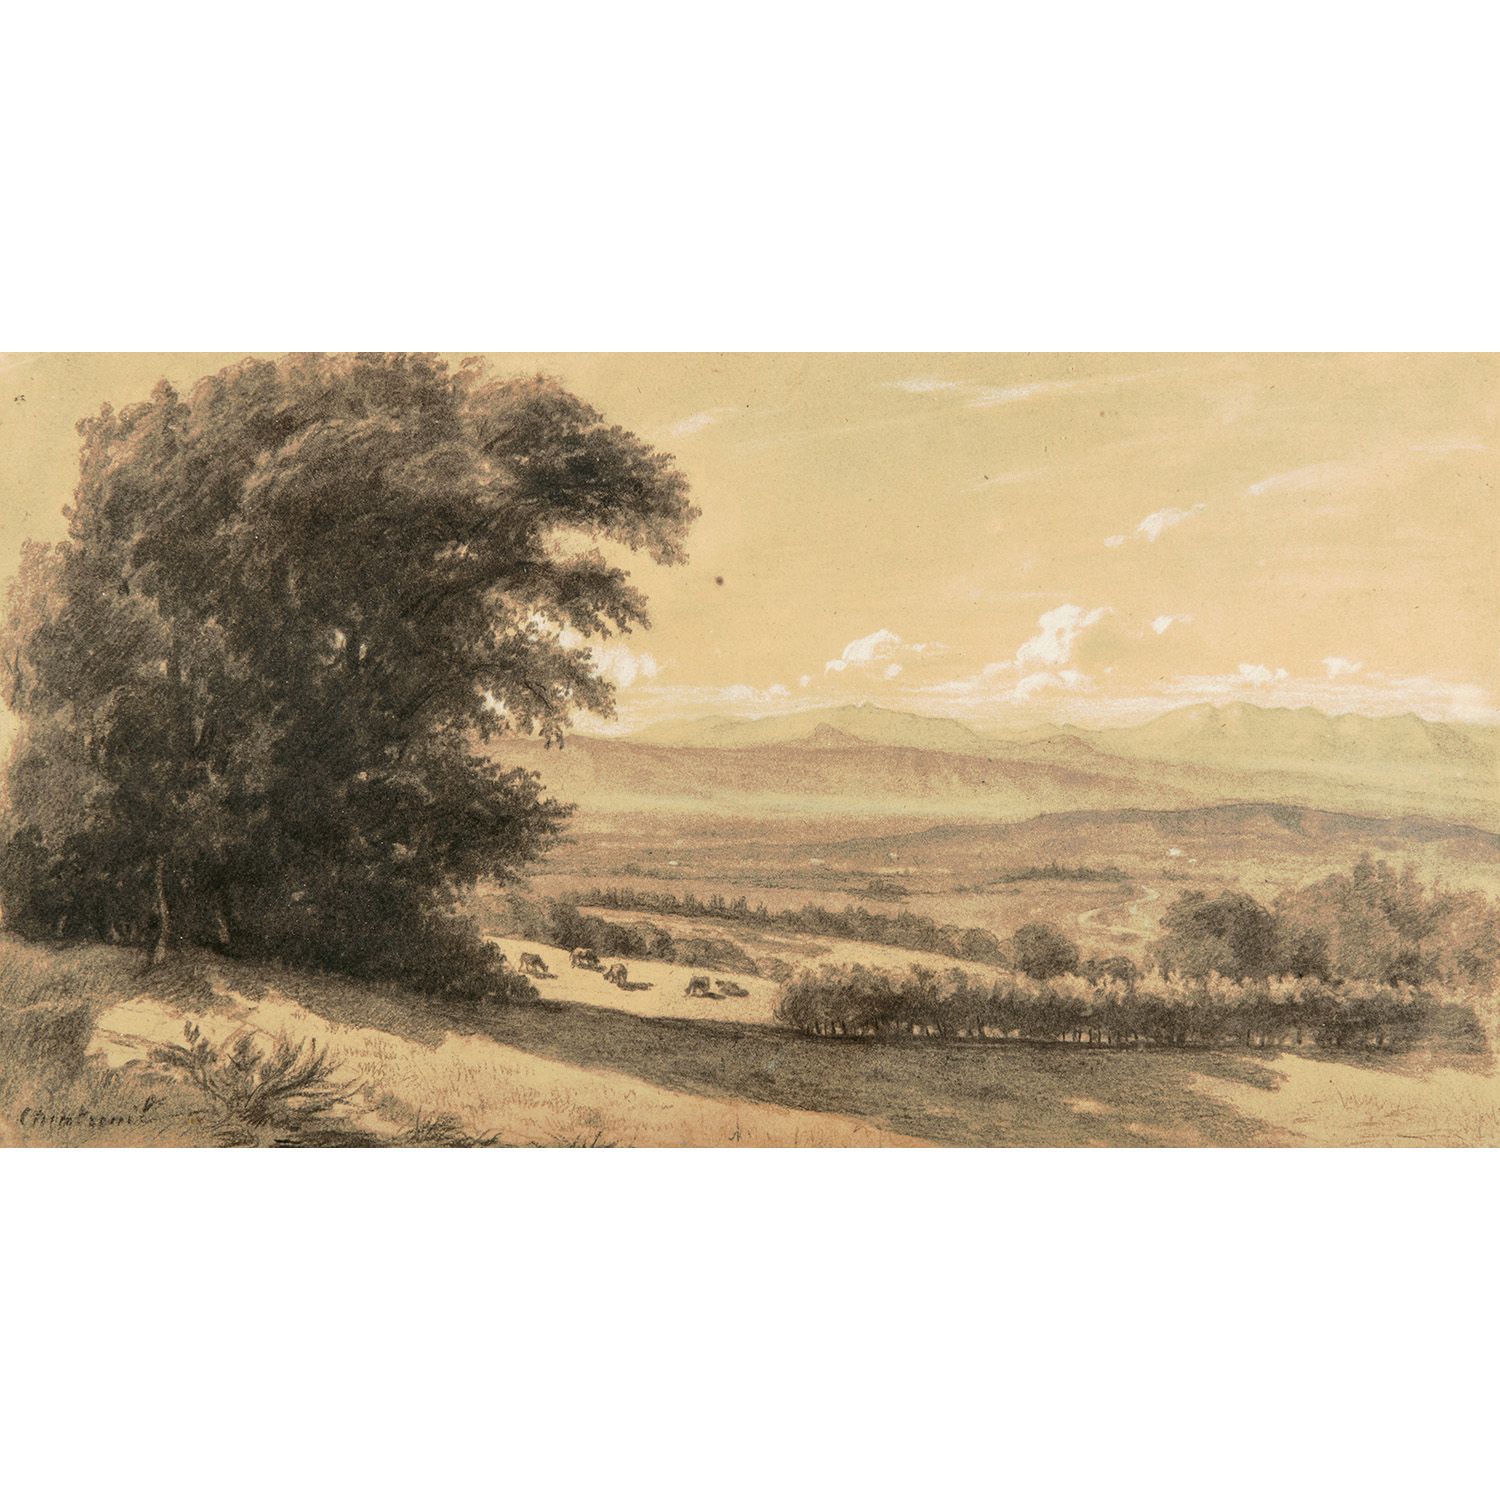 Null ƒ ANTOINE CHINTREUIL (1814-SEPTEUIL, 1873)

牛山风景

黑色铅笔和白色粉笔高光

左下方有签名

染色剂
&hellip;